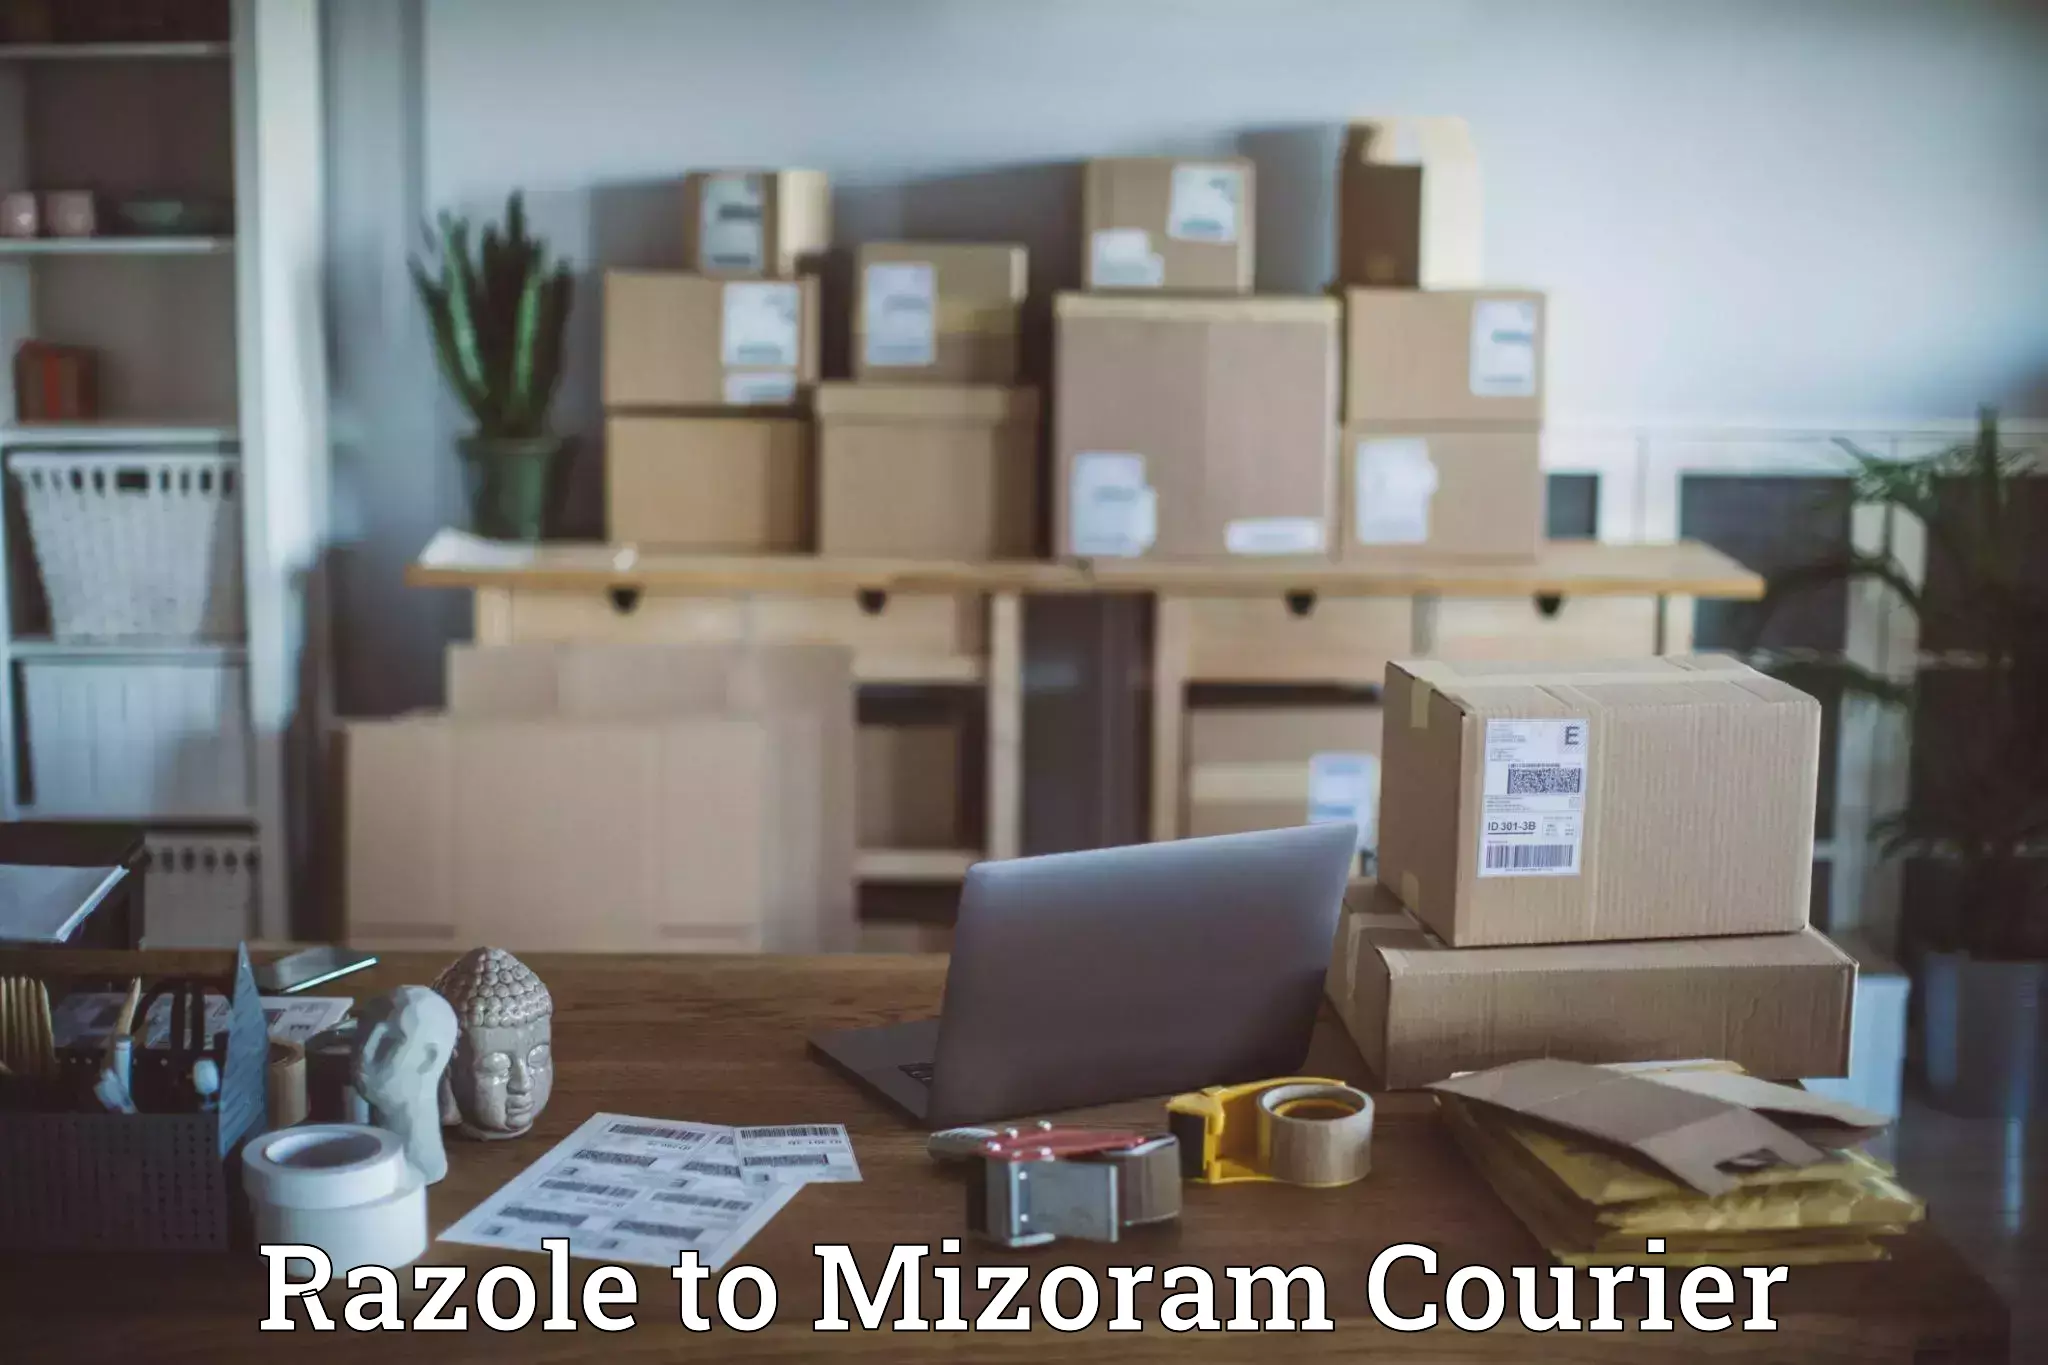 Professional courier handling Razole to Mizoram